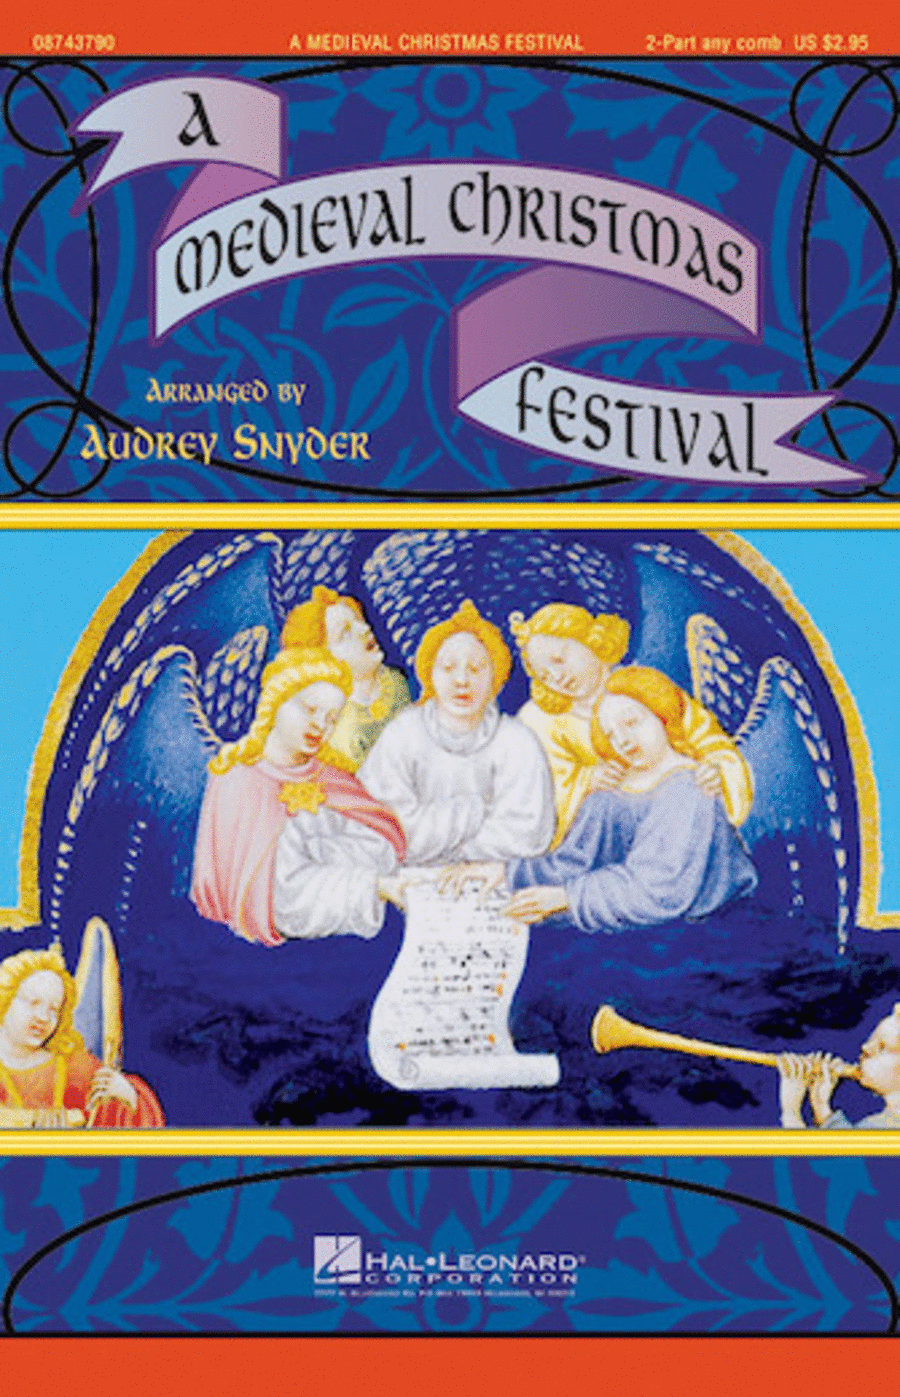 A Medieval Christmas Festival - 2 part